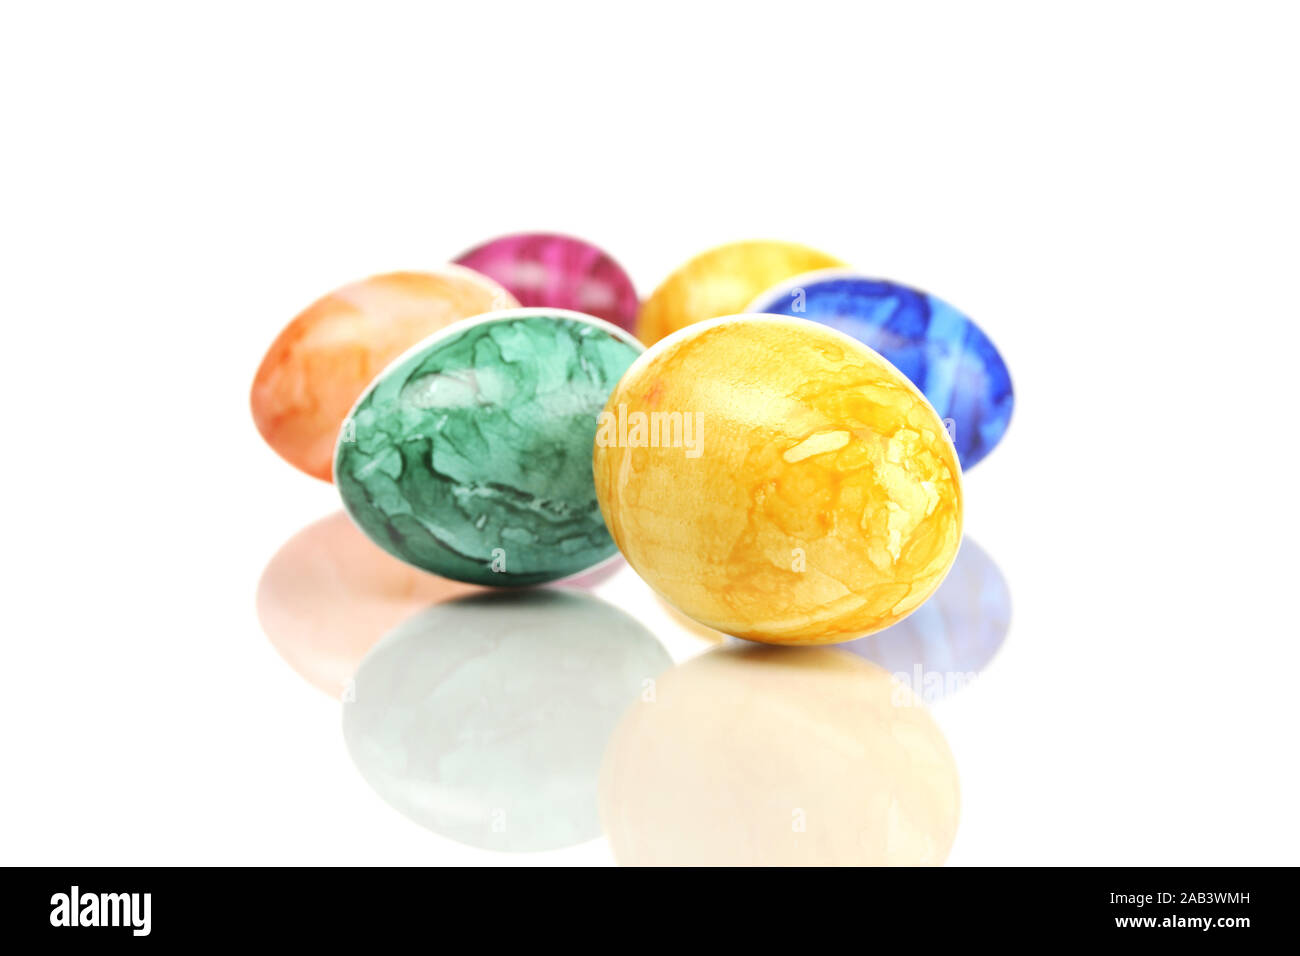 Farbige Ostereier |Colored Easter Eggs| Stock Photo